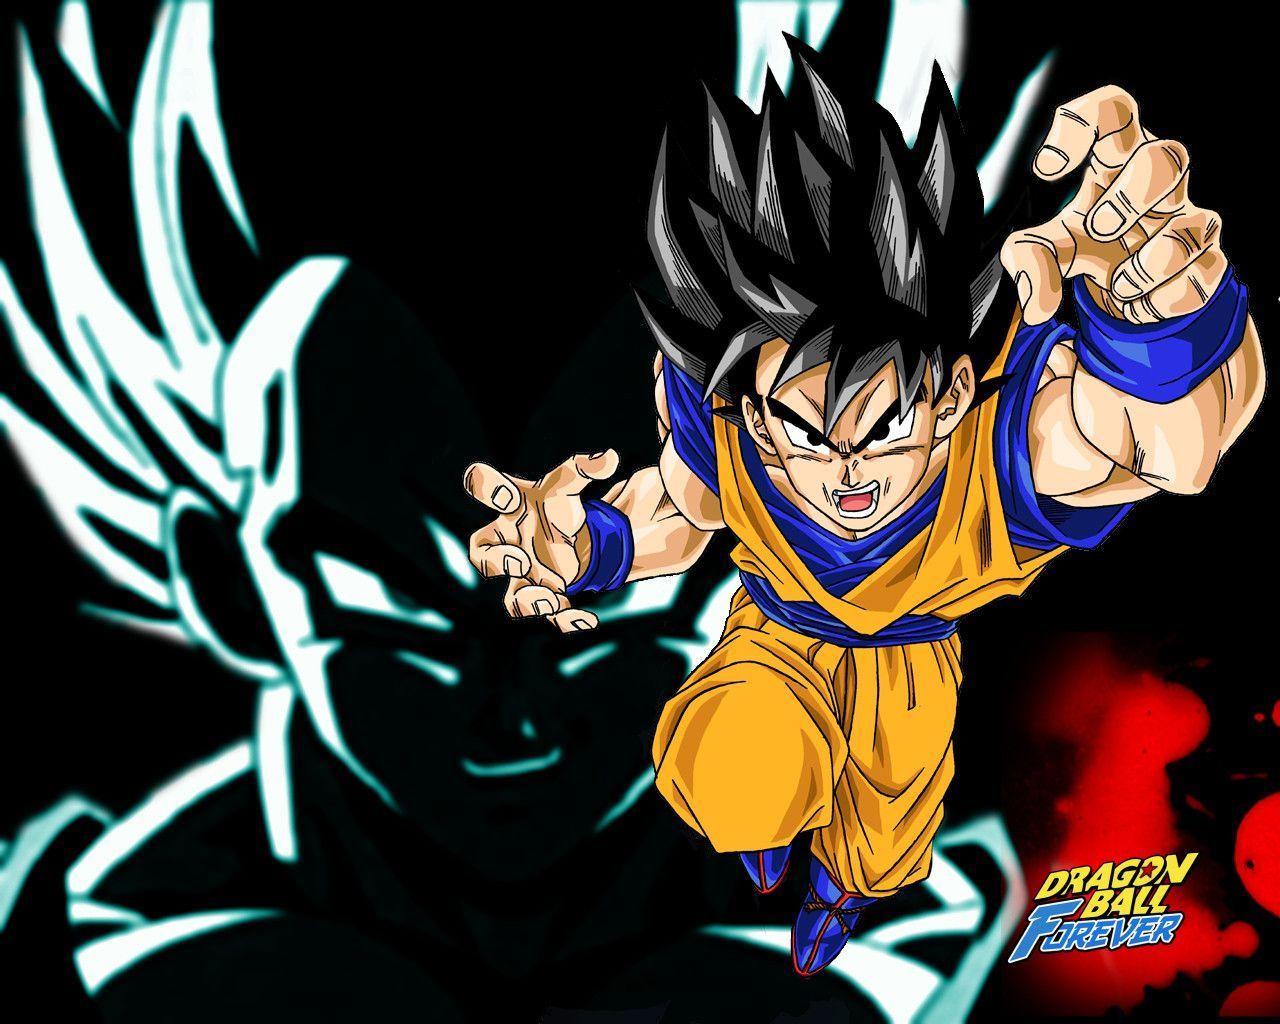 Goku the legendary SuperSaiyan